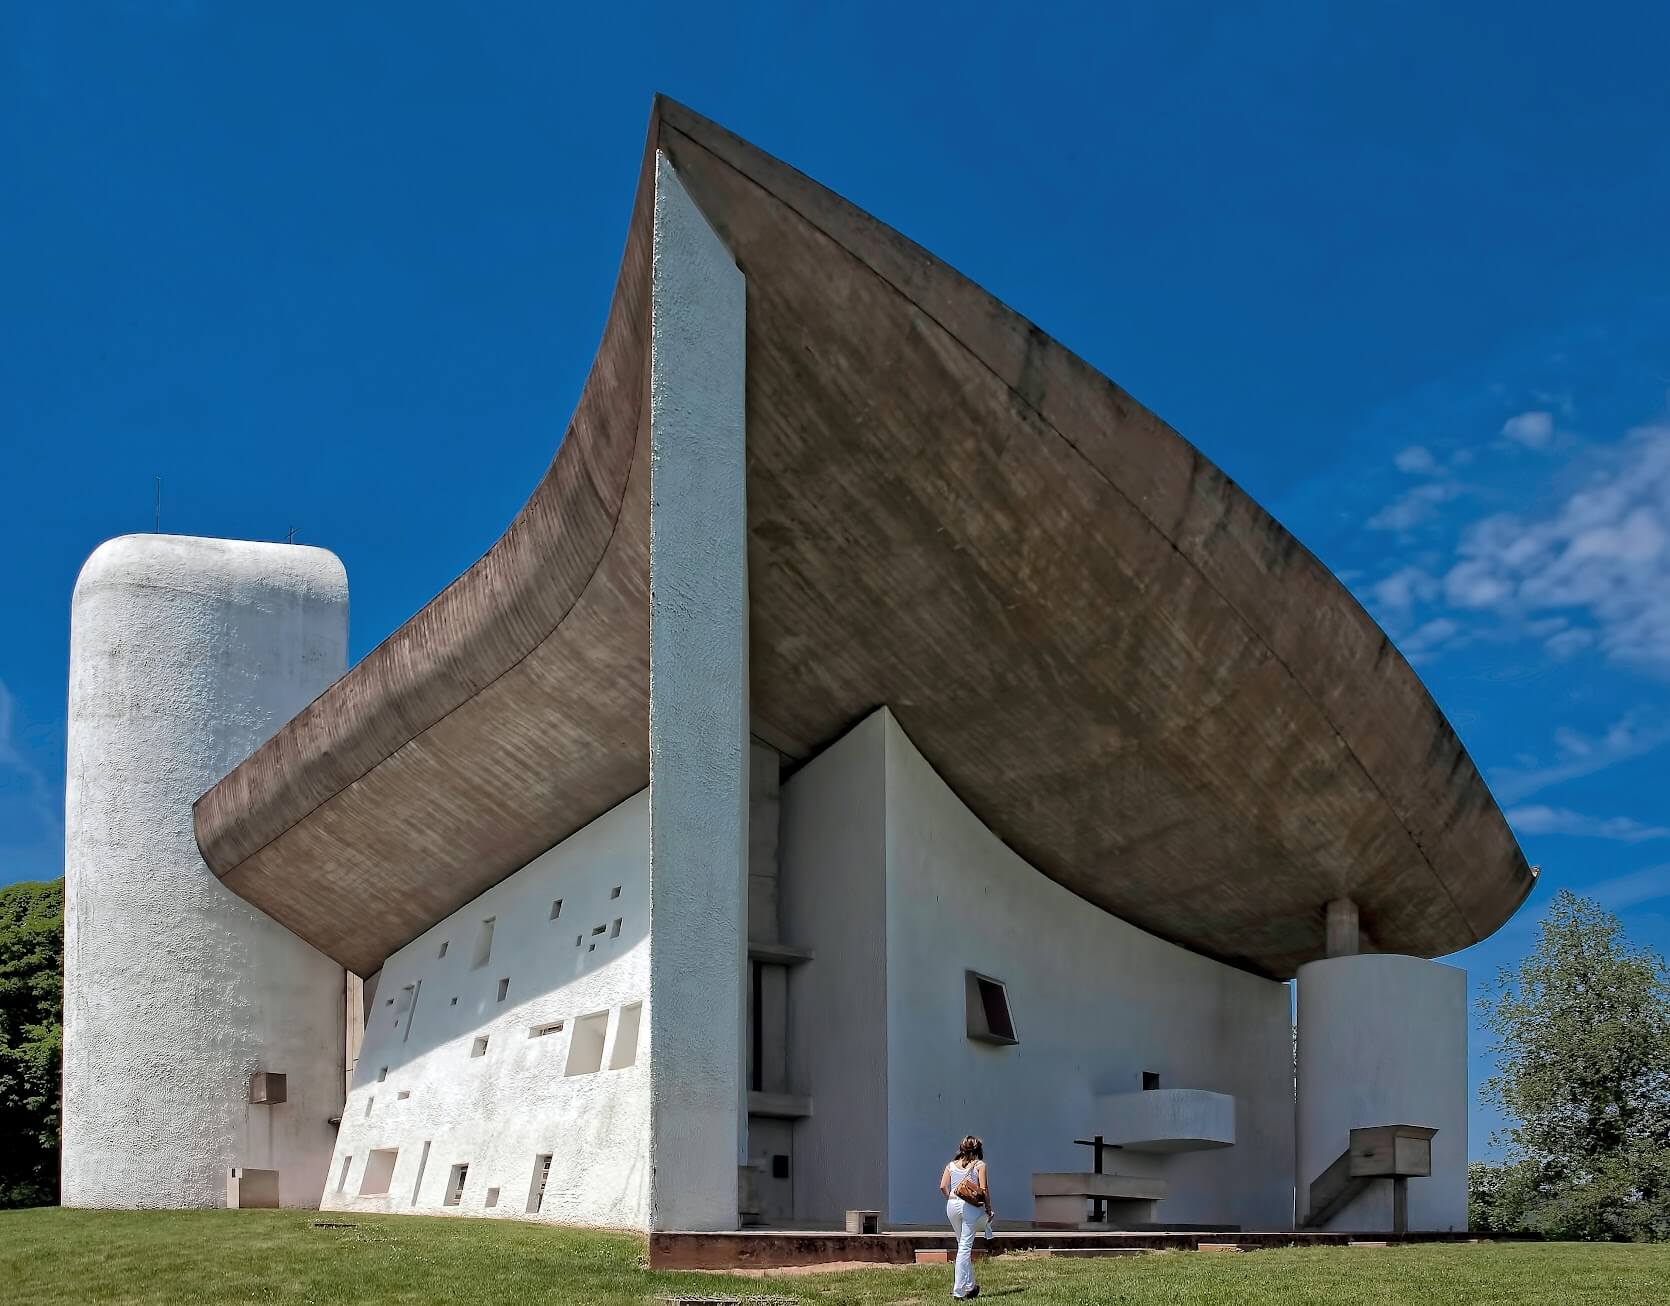 Where to see Le Corbusier's architecture in Europe - Culture tourist